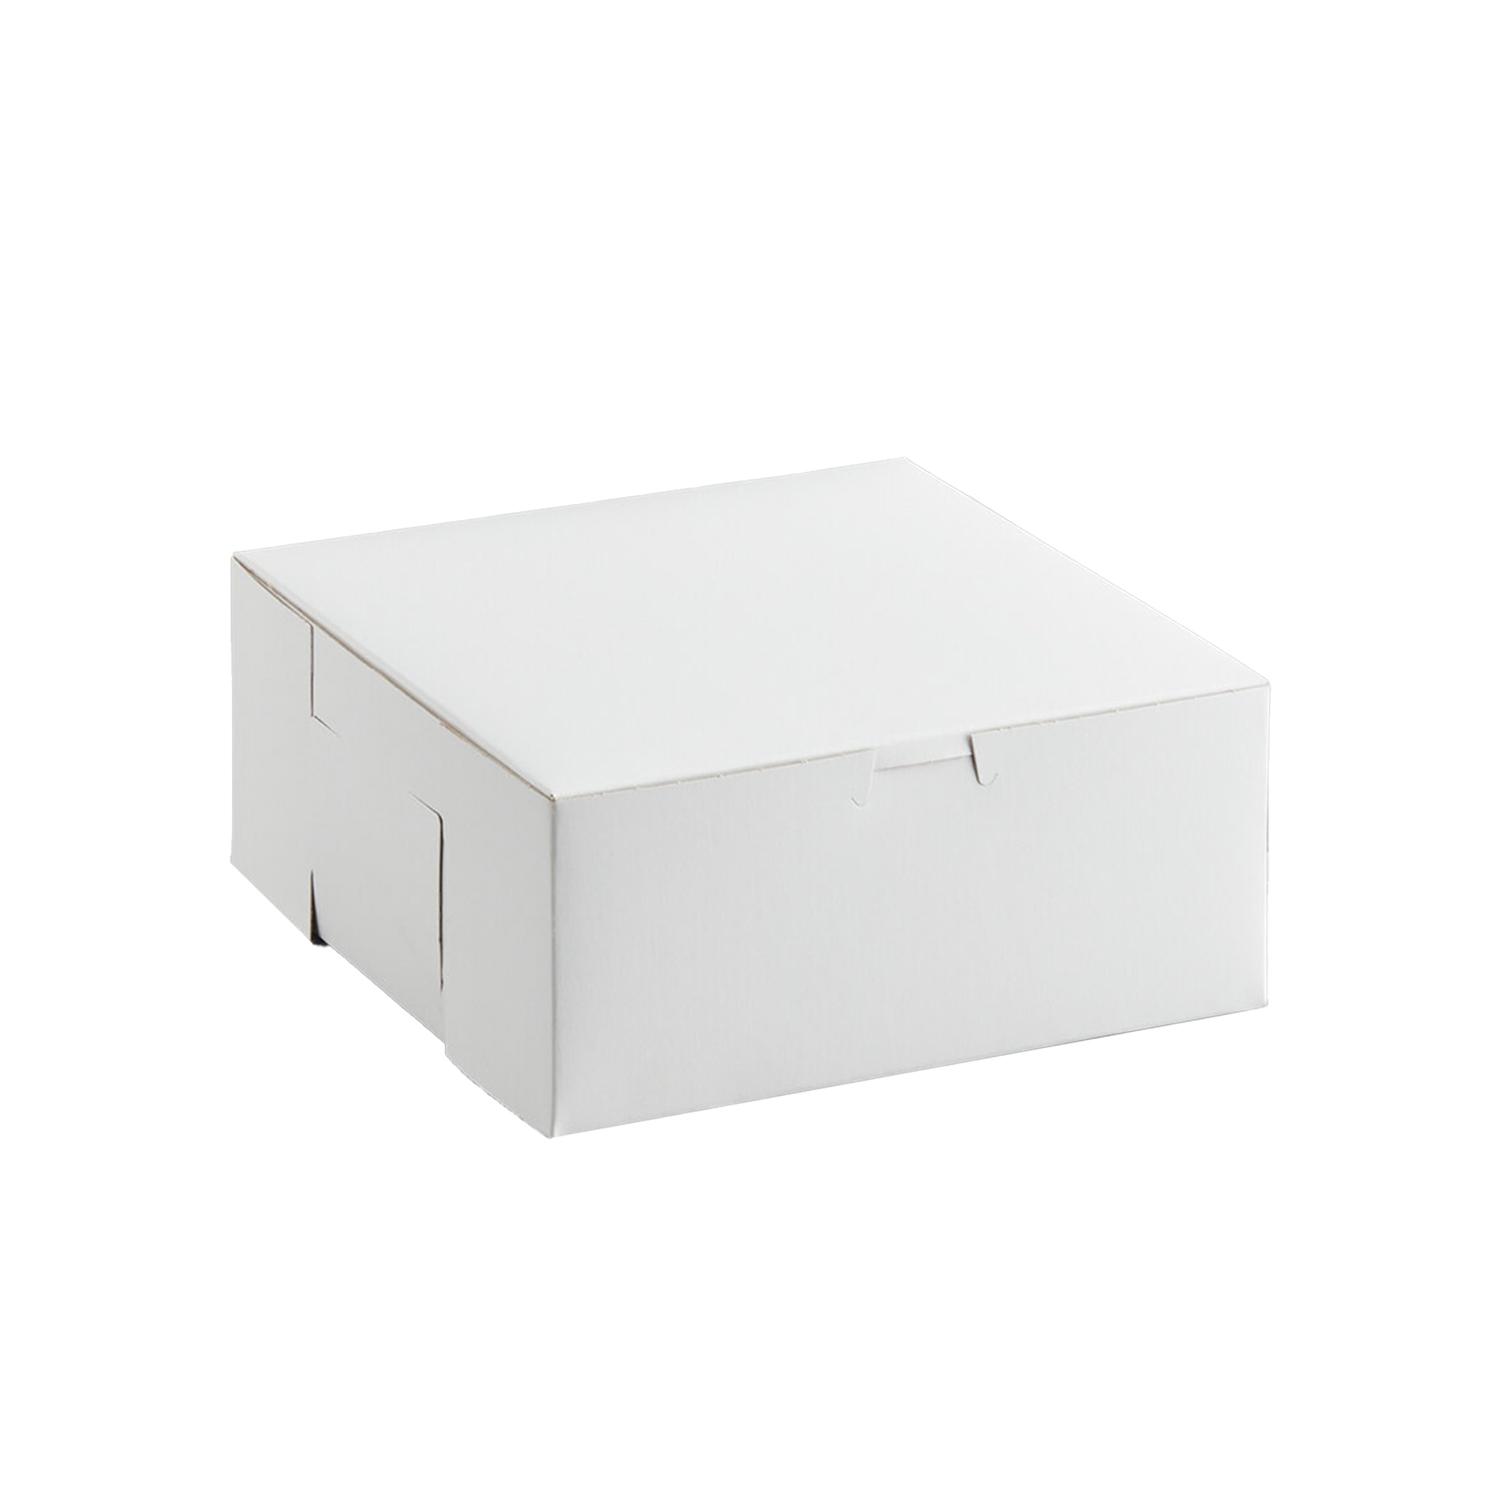 8'' X 8'' X 4'' WHITE CAKE BOX